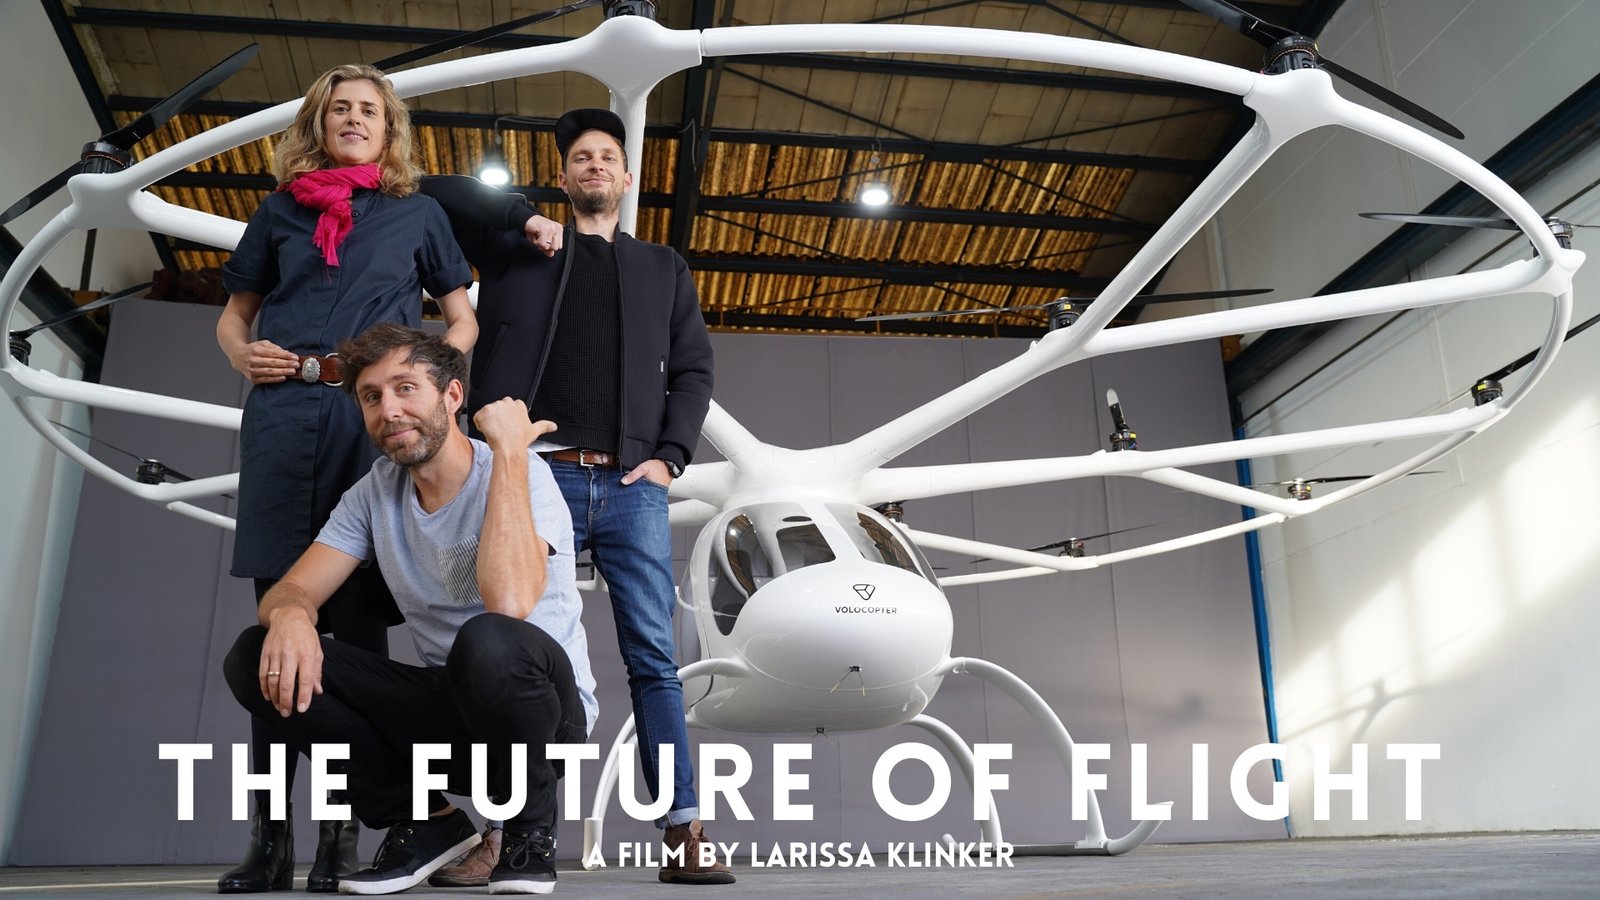 The Future of Flight